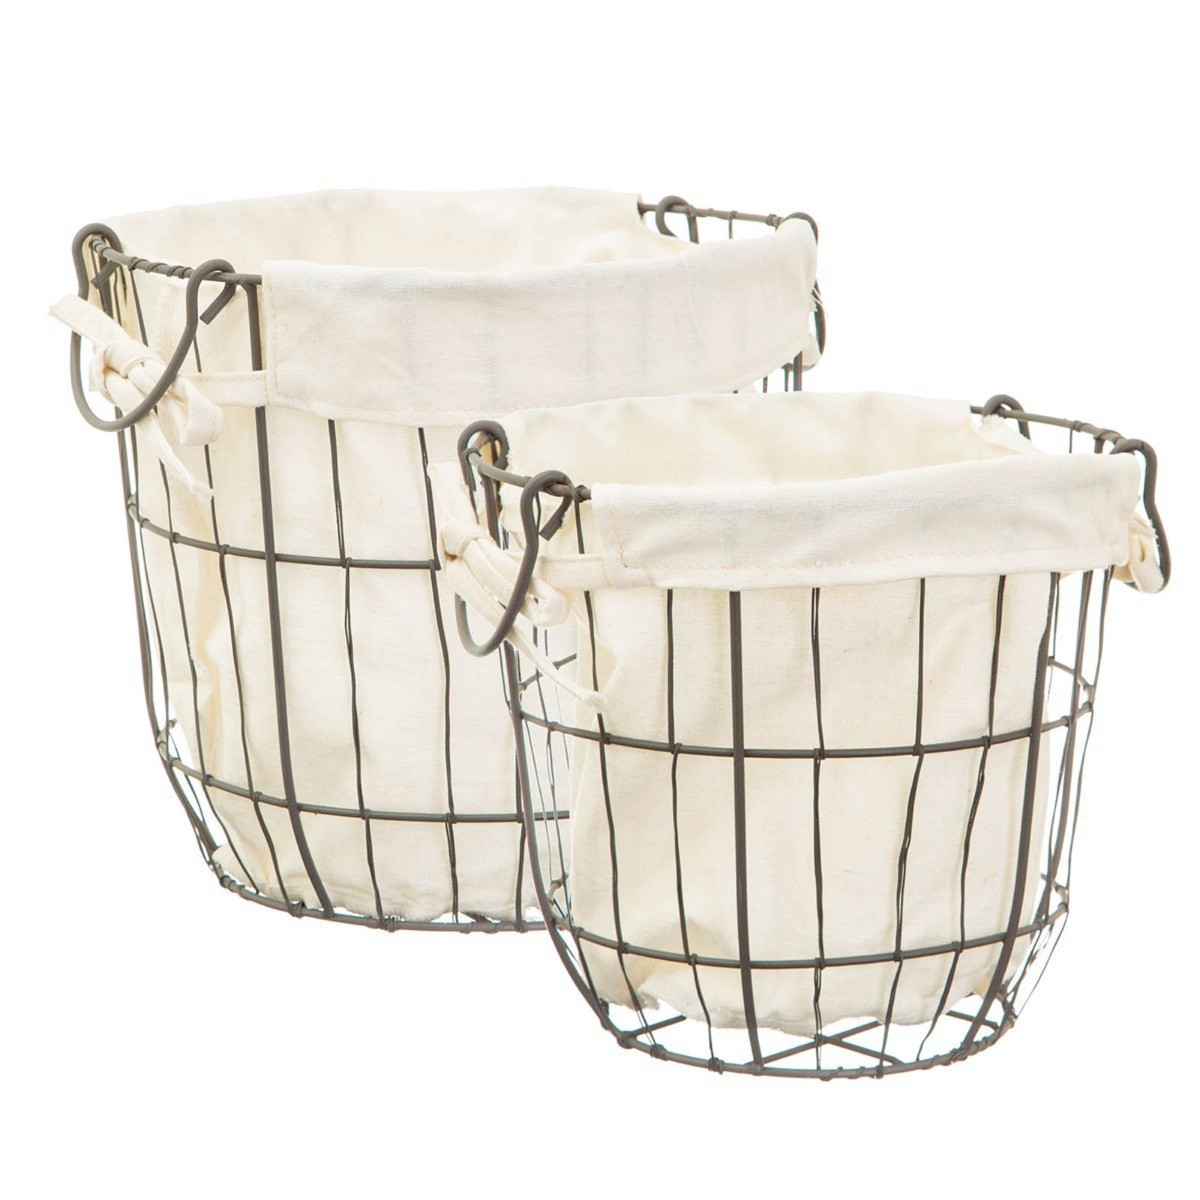 Sass & Belle Round Wire Storage Baskets With Lining, 2 Pack - Black>